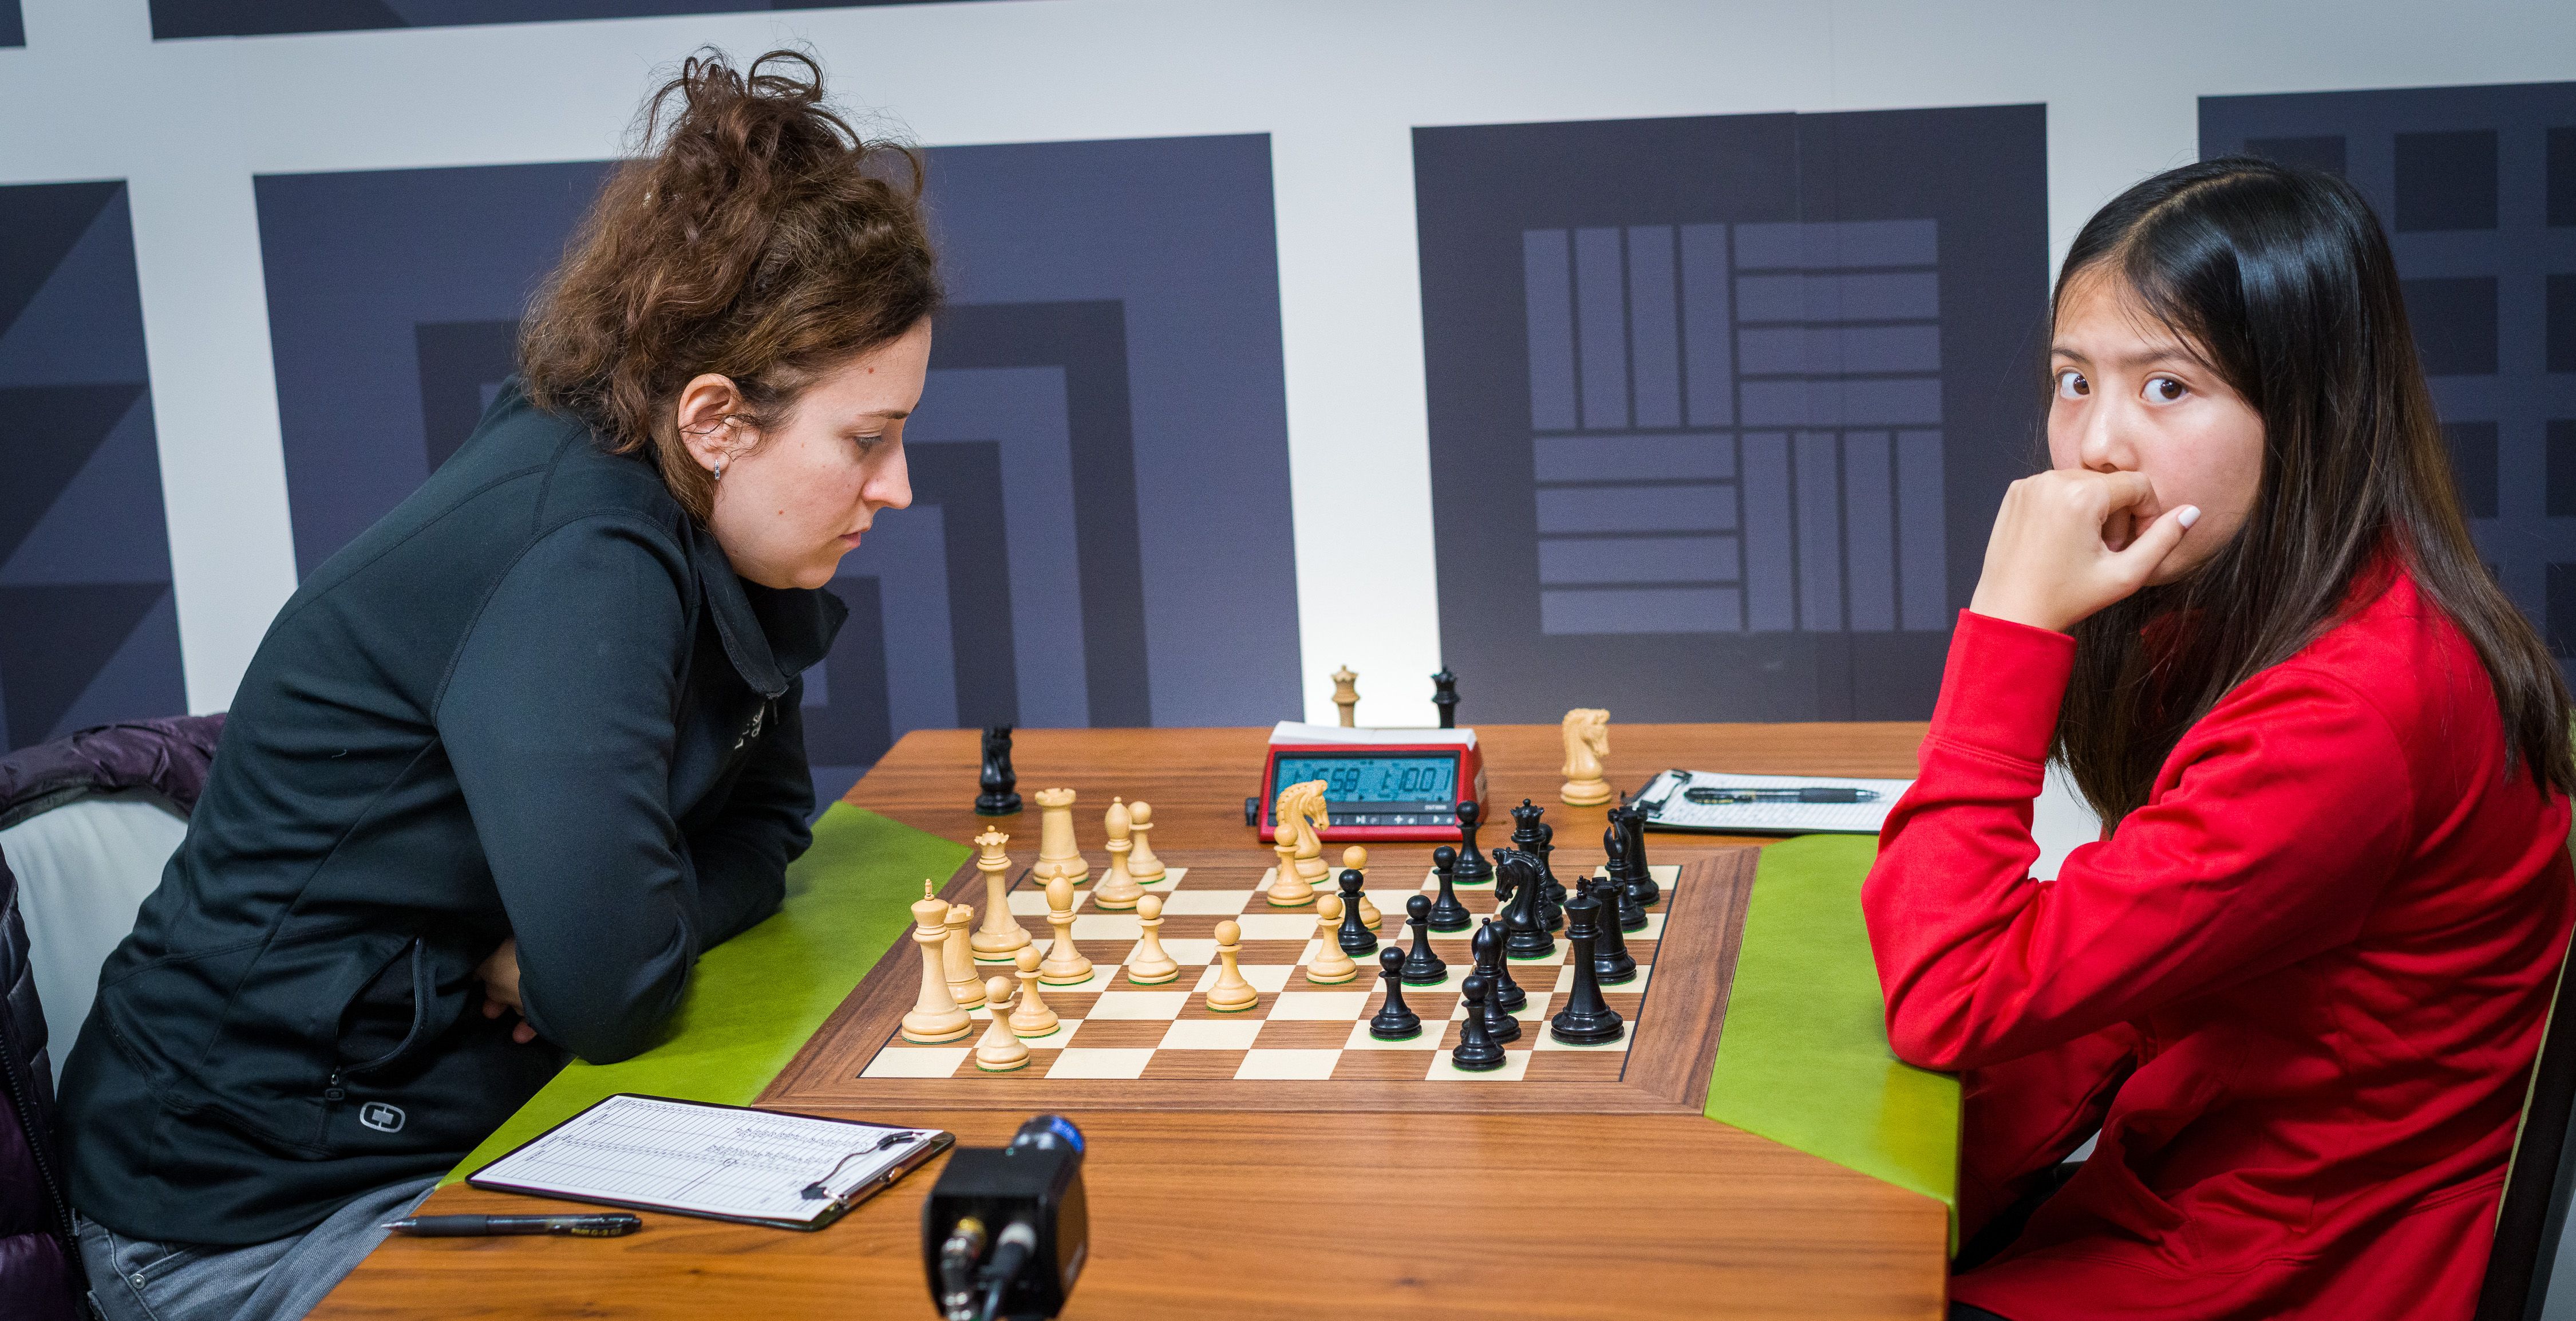 Hans Niemann searched at US Chess Championship - LBC